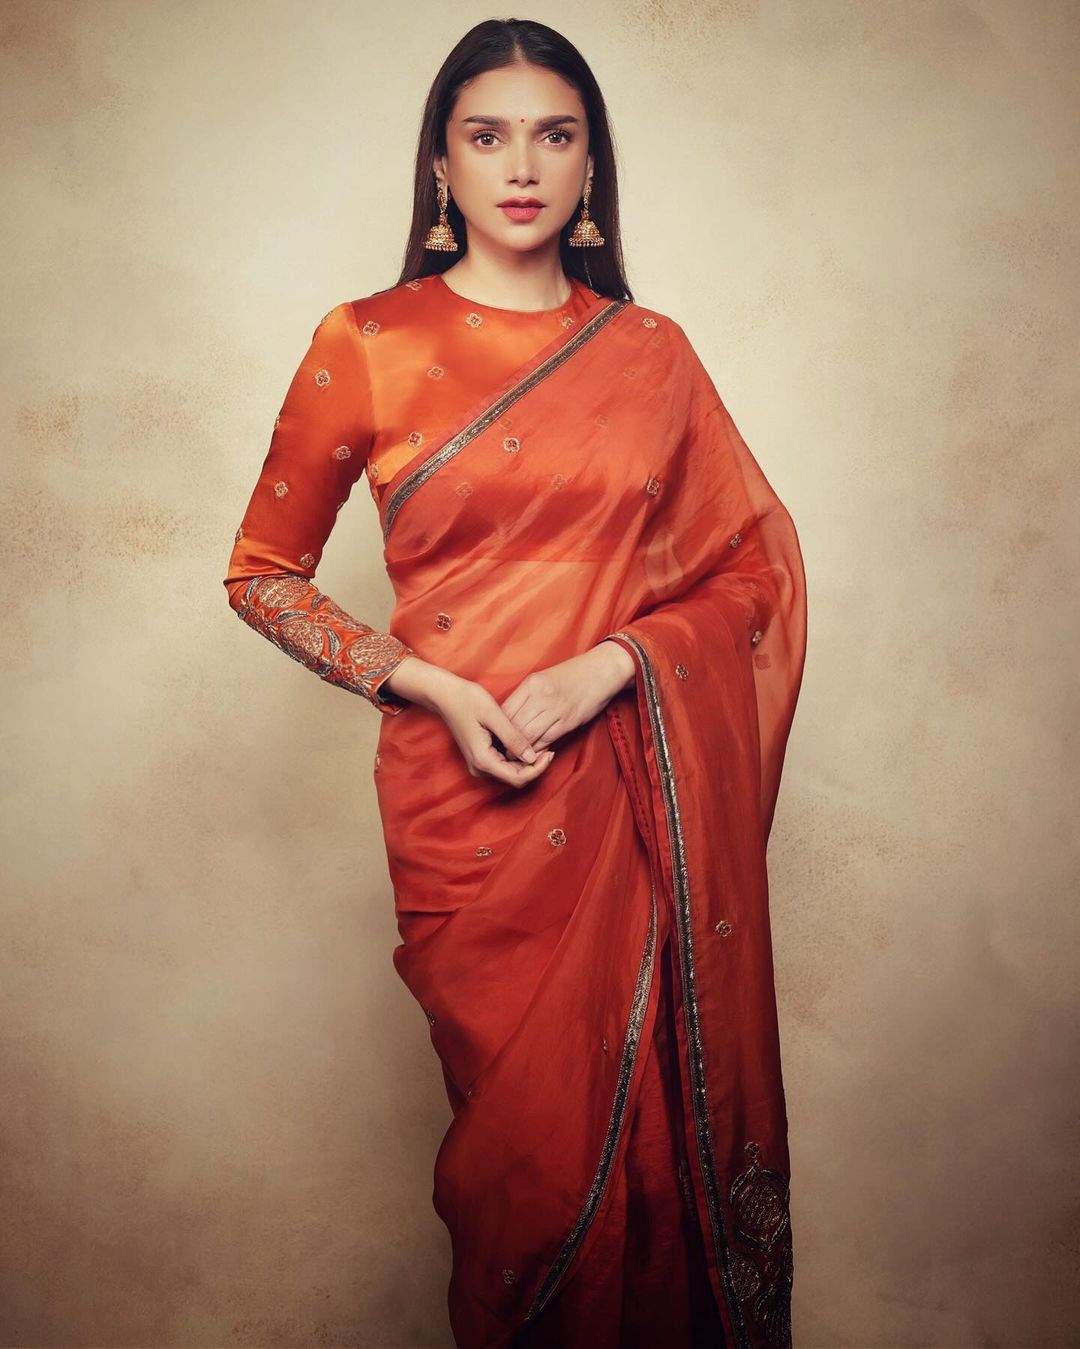 Bollywood Actress Aditi Rao Hydari In Orange Saree